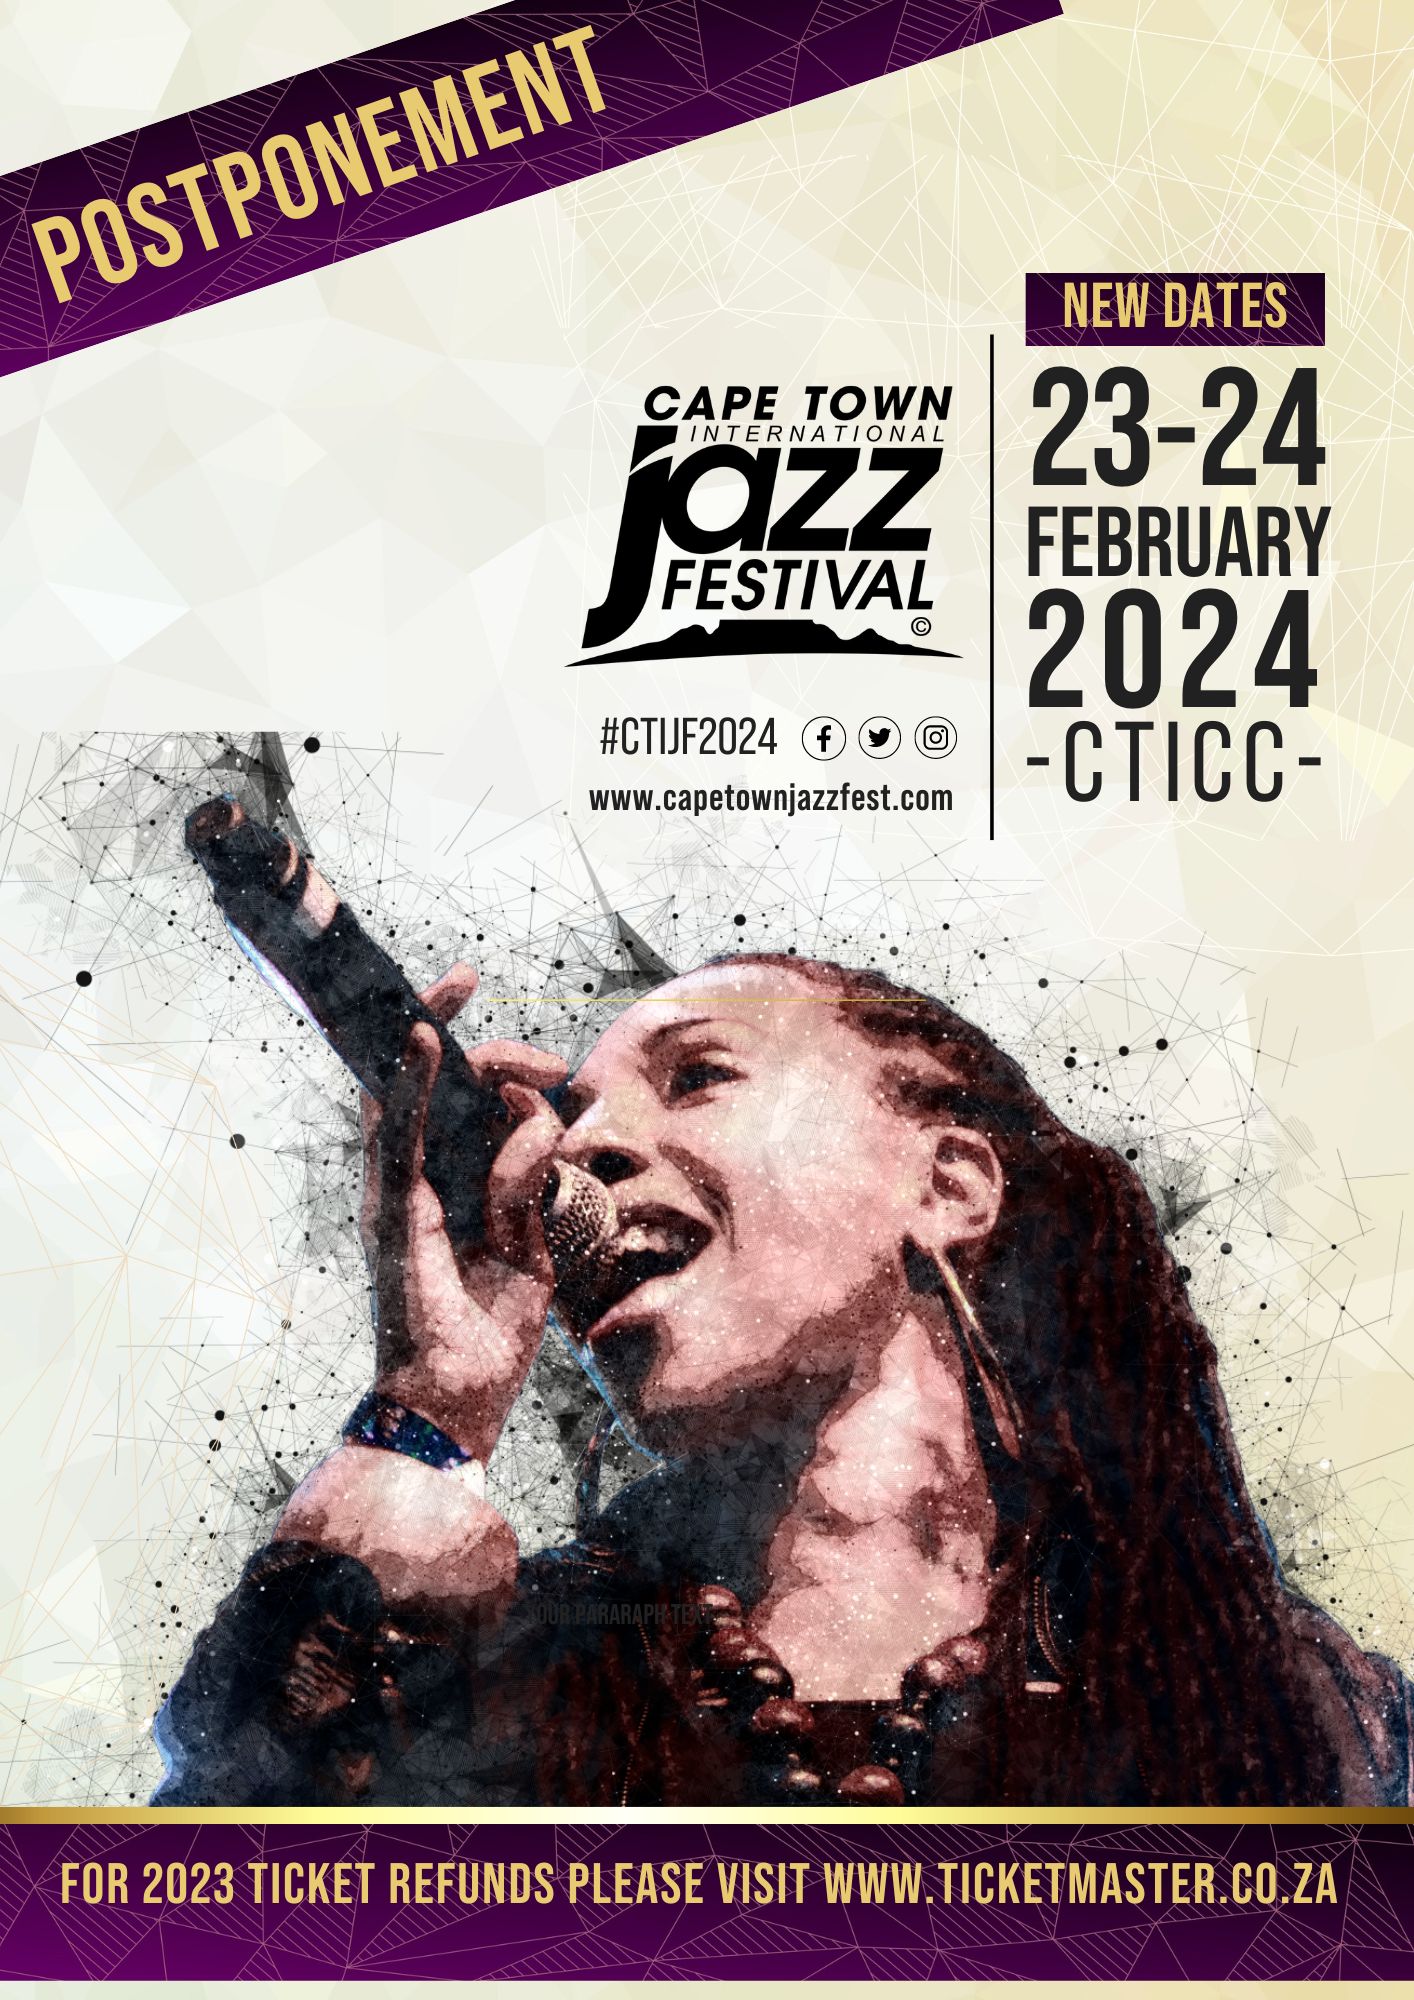 The Cape Town International Jazz Festival Jazz Cape Town